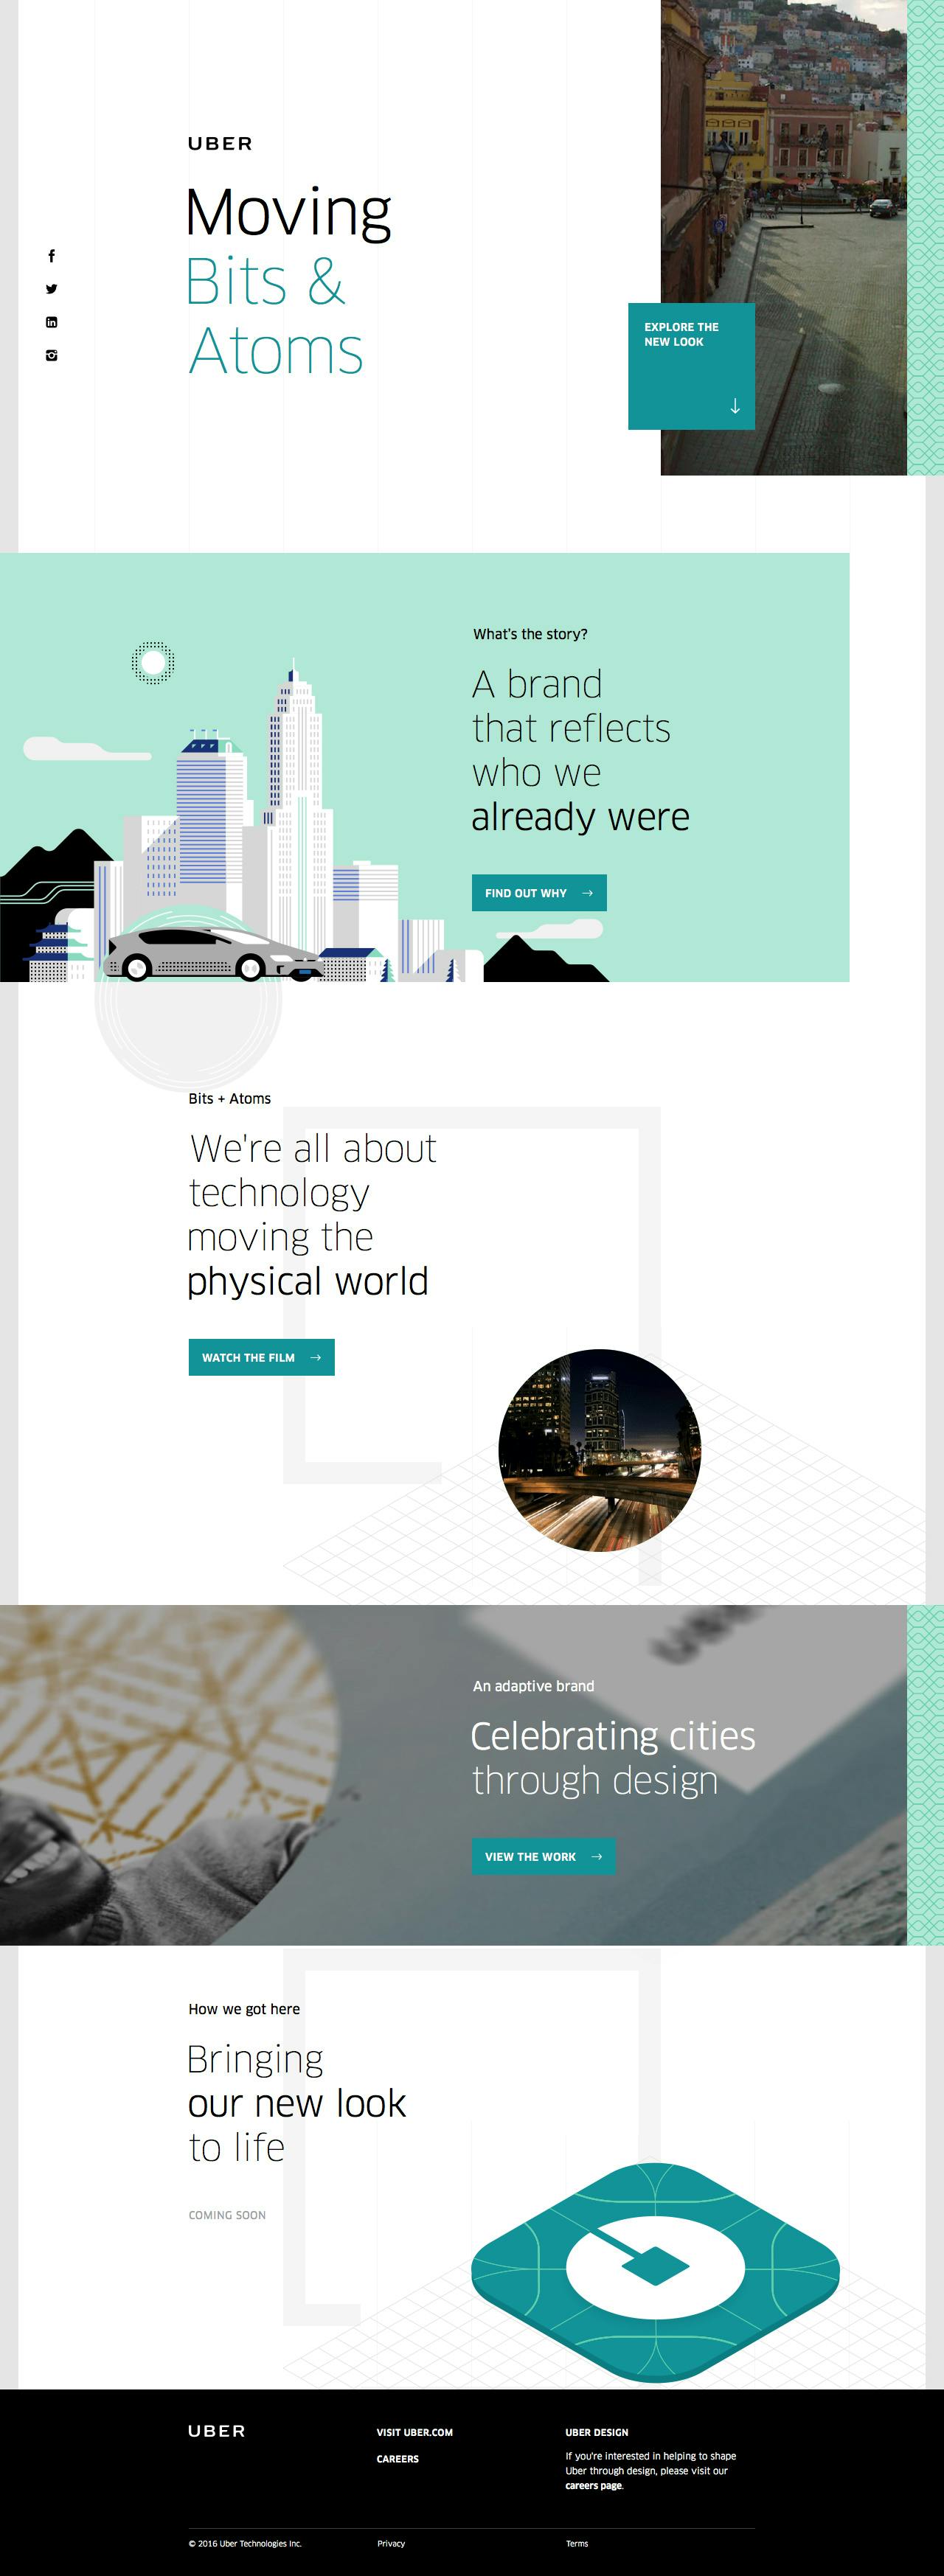 Uber Brand Experience Website Screenshot